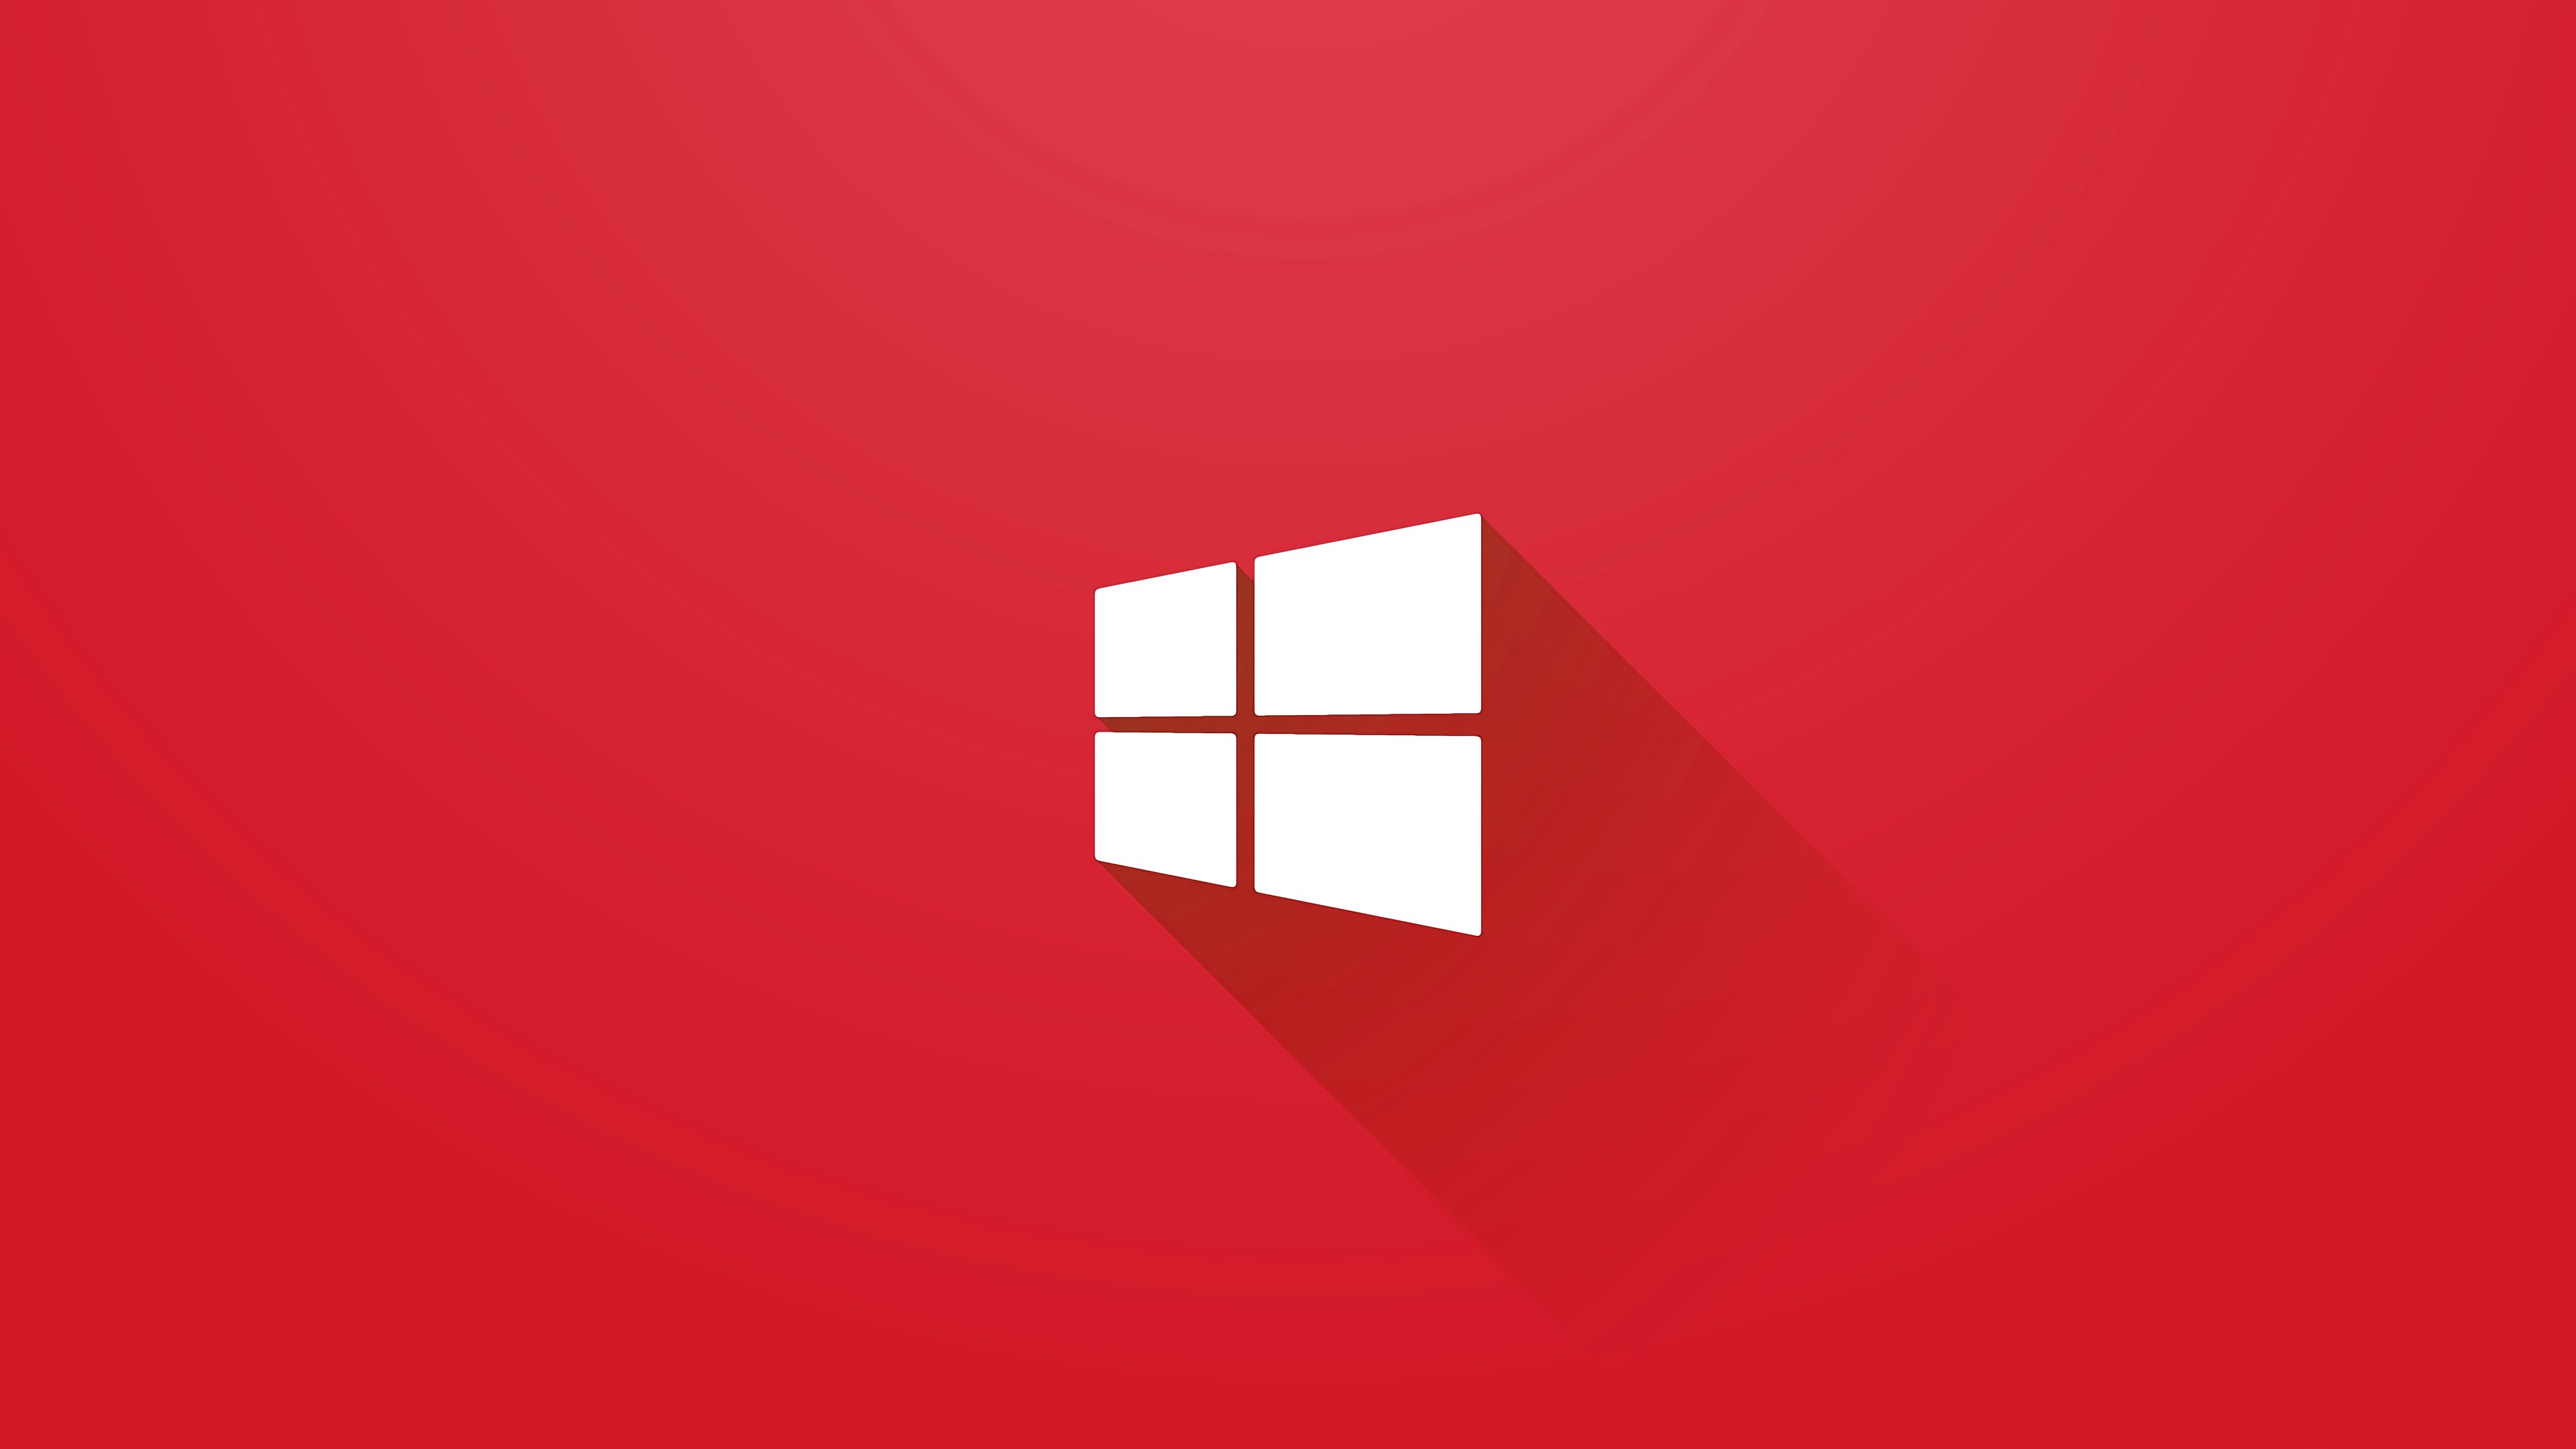 Windows 10, logo, brand, red | 3840x2160 Wallpaper - wallhaven.cc